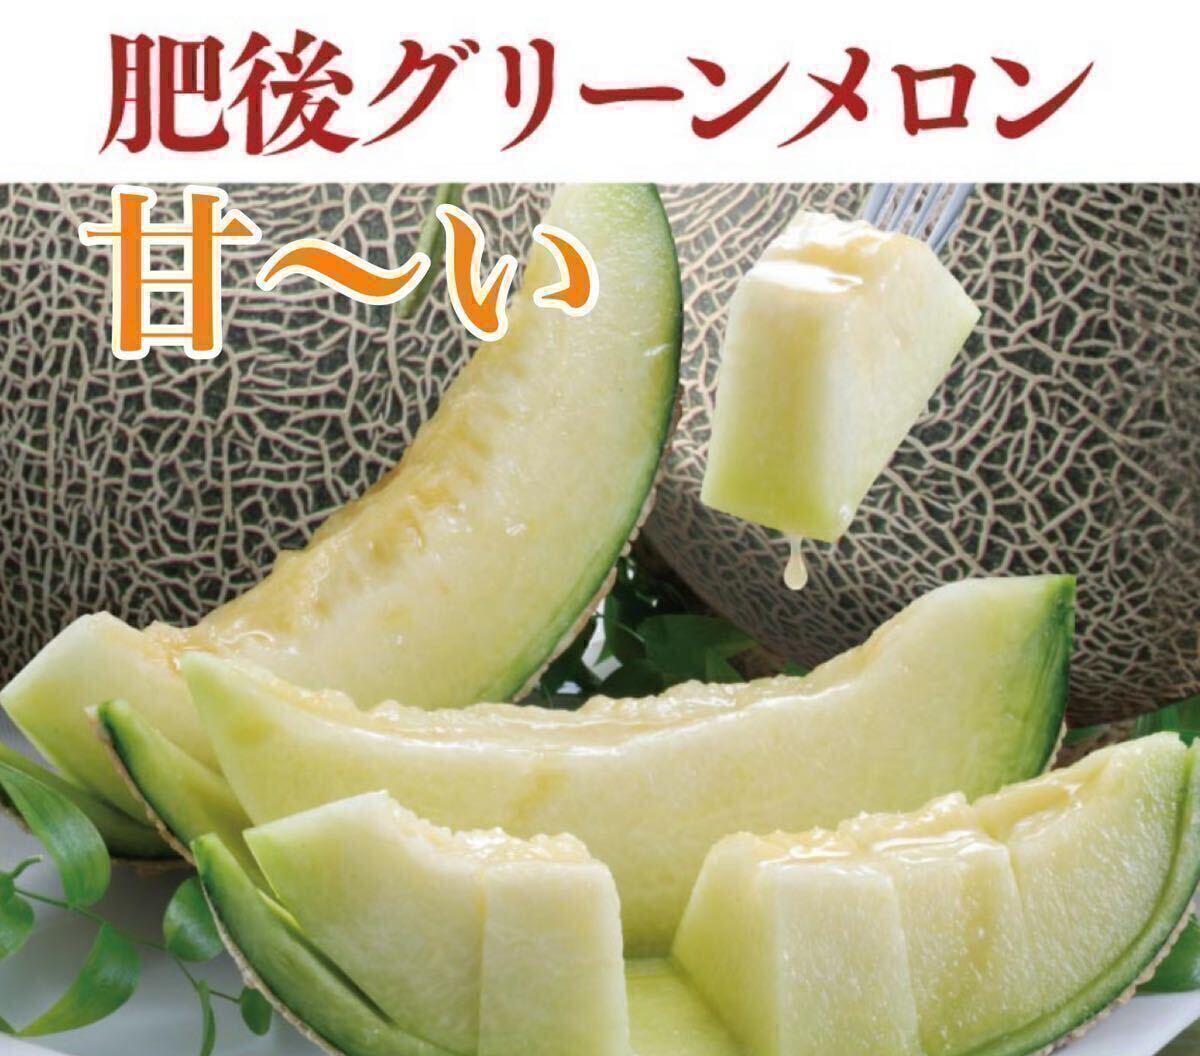 [.. north ] Kumamoto production . after green [ preeminence goods 4L size 2 sphere set approximately 4.6k box included Kumamoto fruit 26